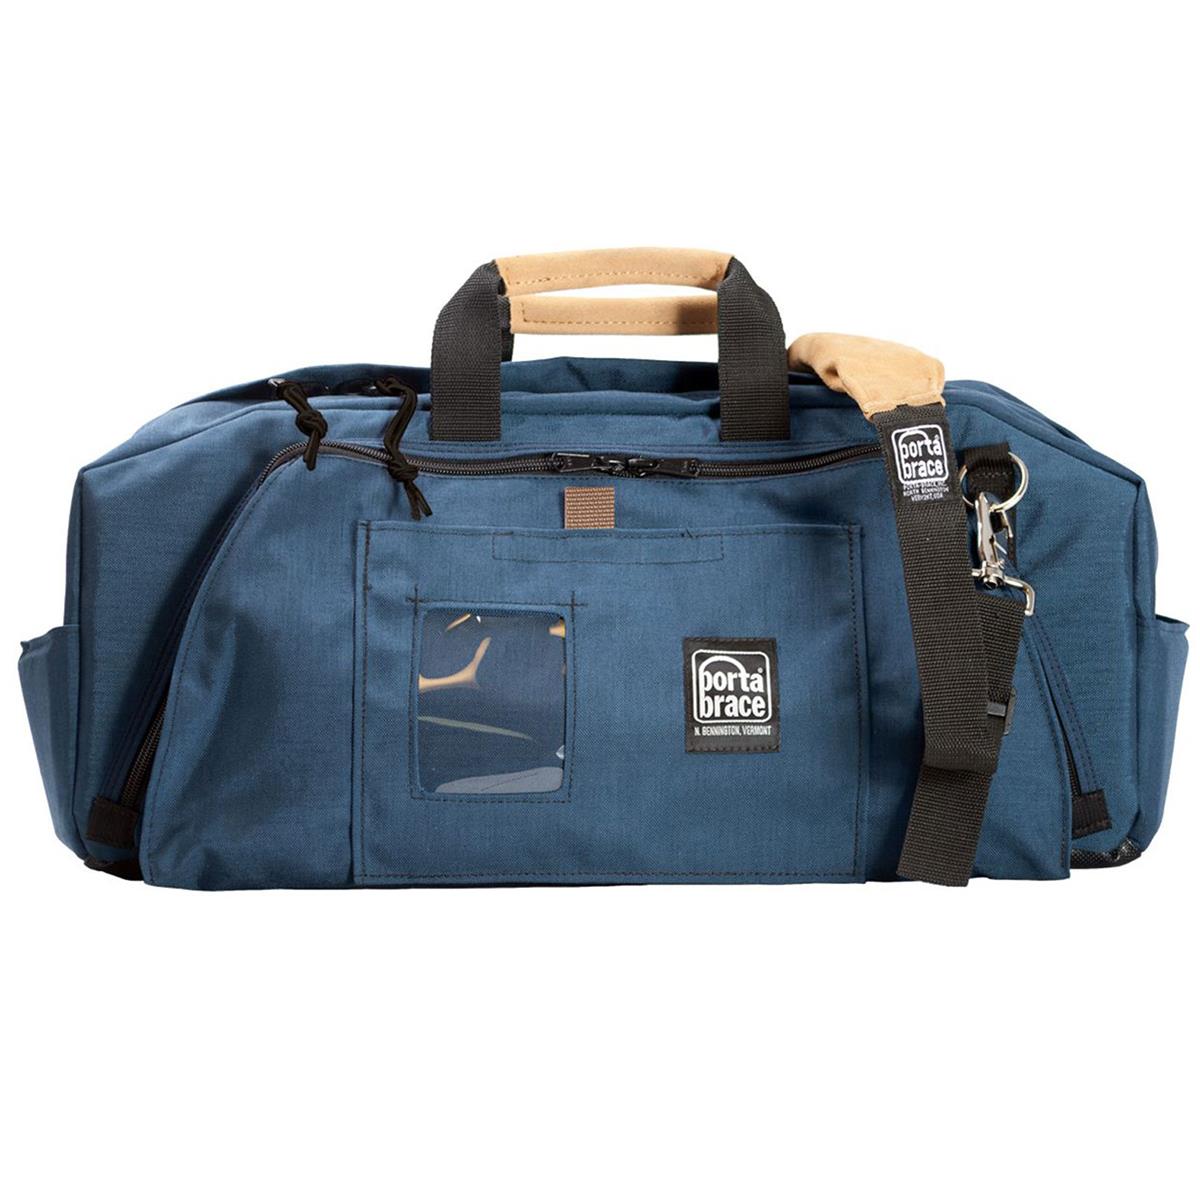 Porta Brace Run Bag, сумка для хранения аксессуаров для видеопроизводства, синяя #RB-2